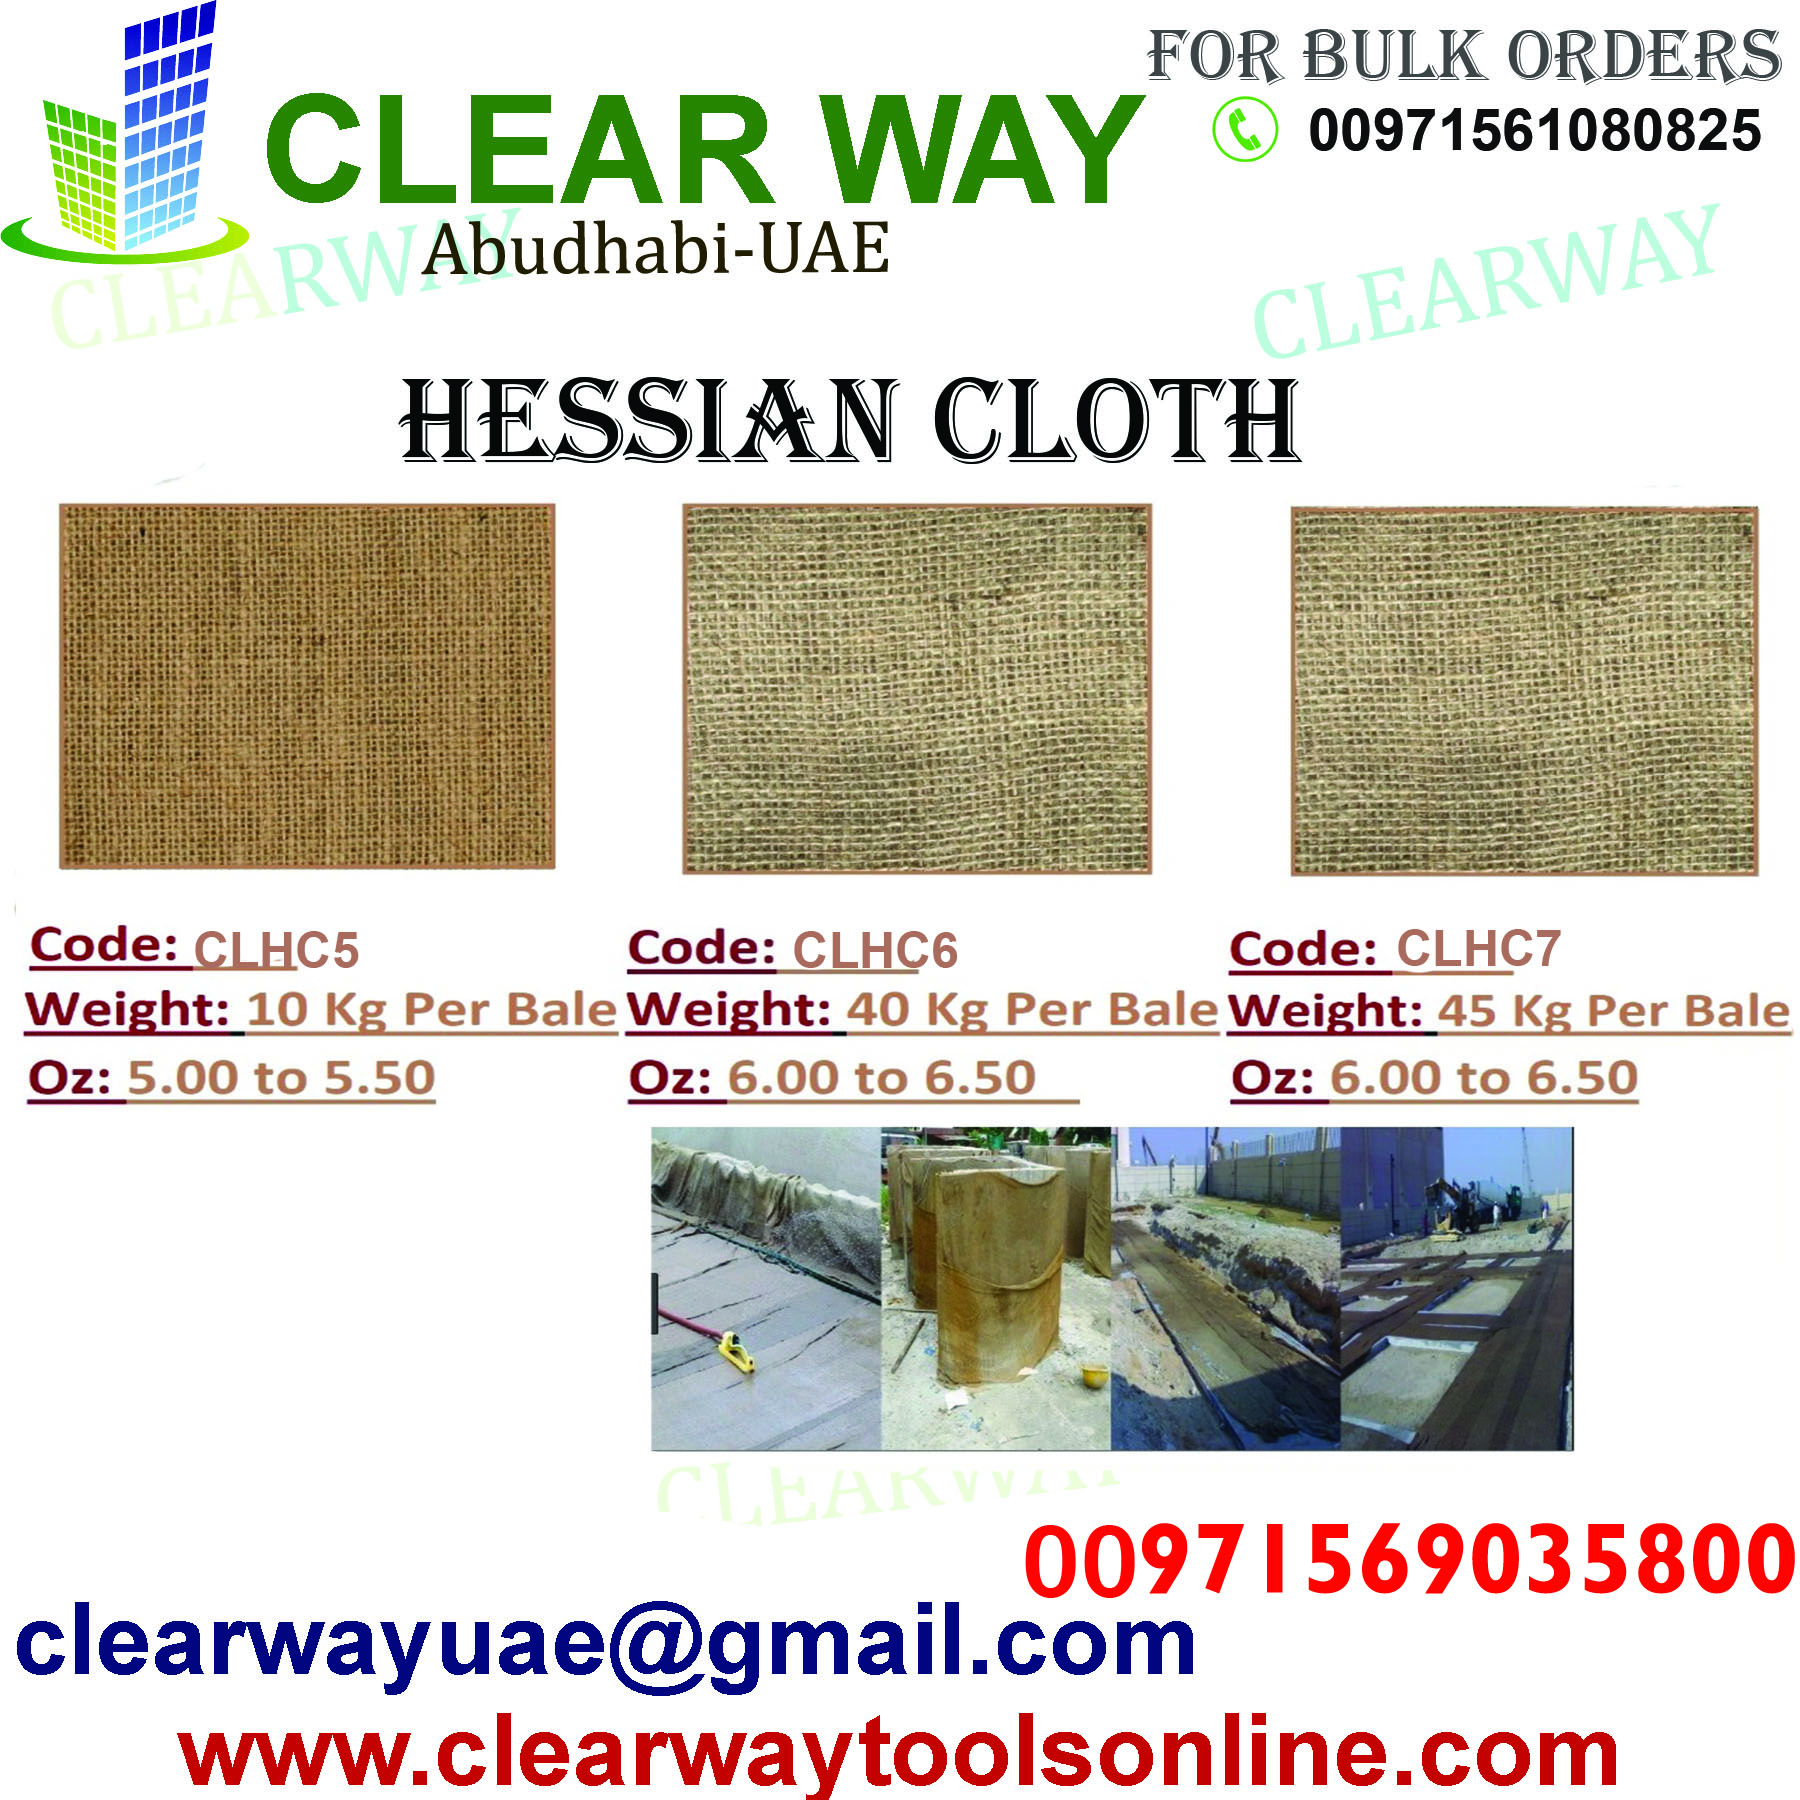 HESSIAN CLOTH DEALER IN MUSSAFAH ABUDHABI UAE CLEARWAY